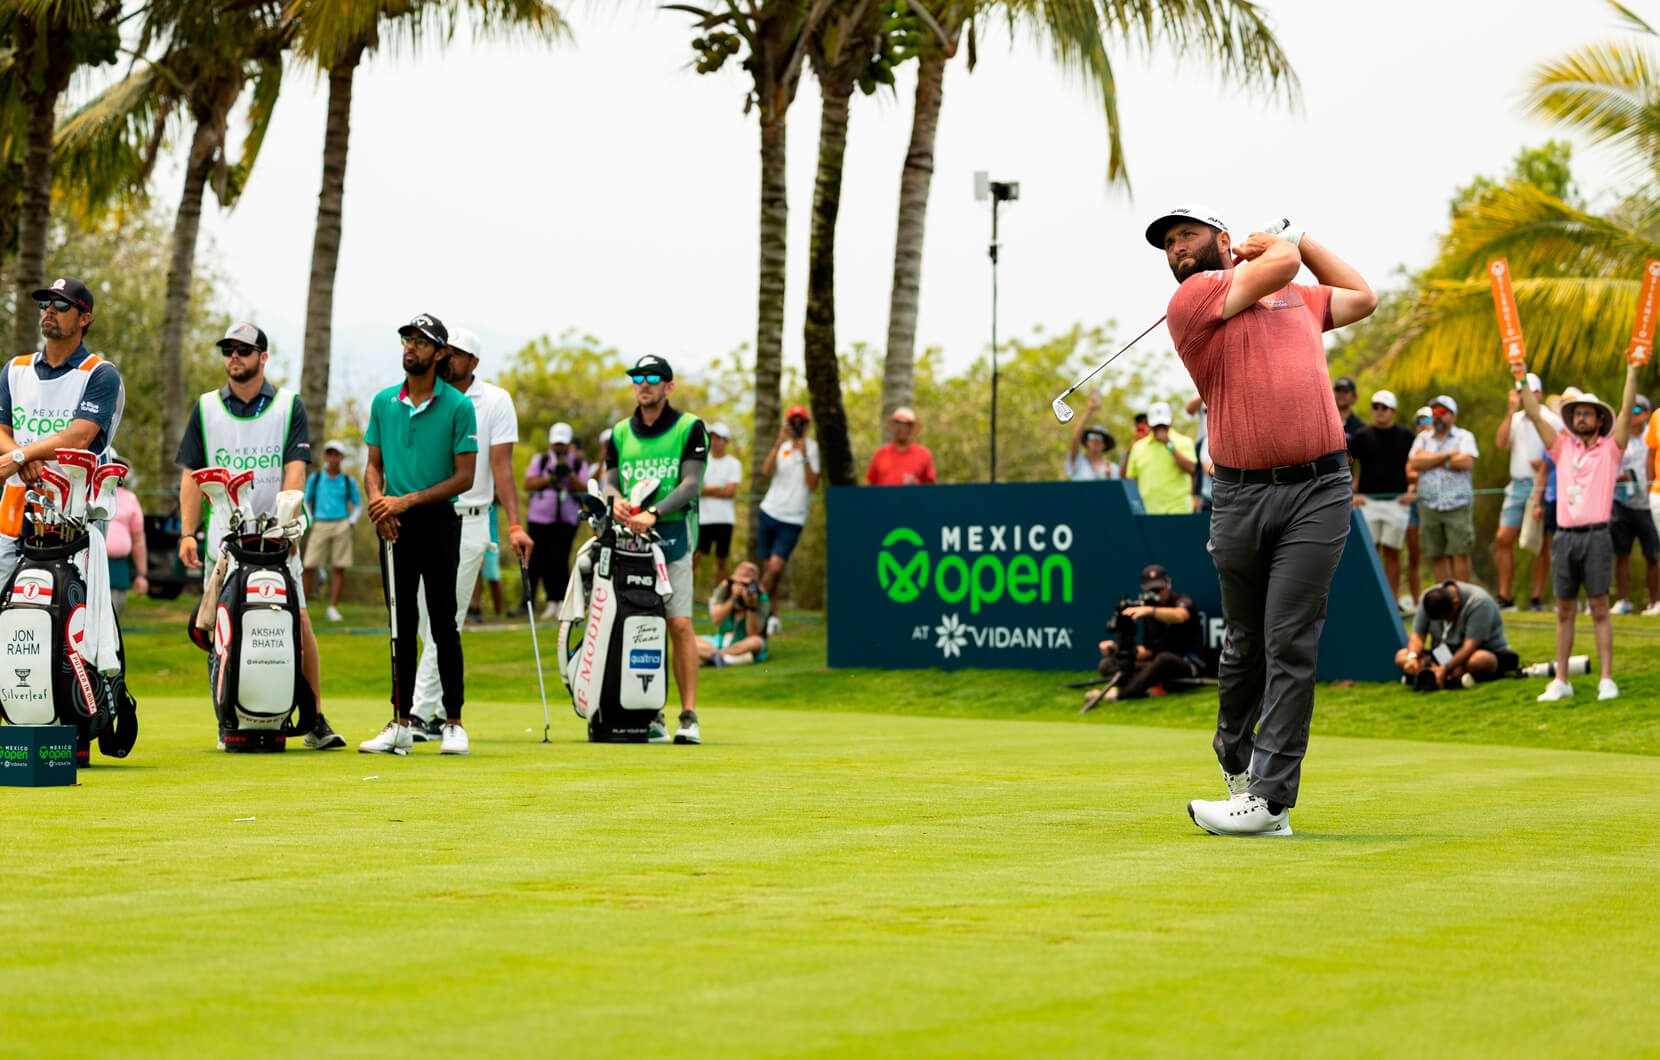 The PGA TOUR Mexico Open at Vidanta Has a New Champion! The Vidanta